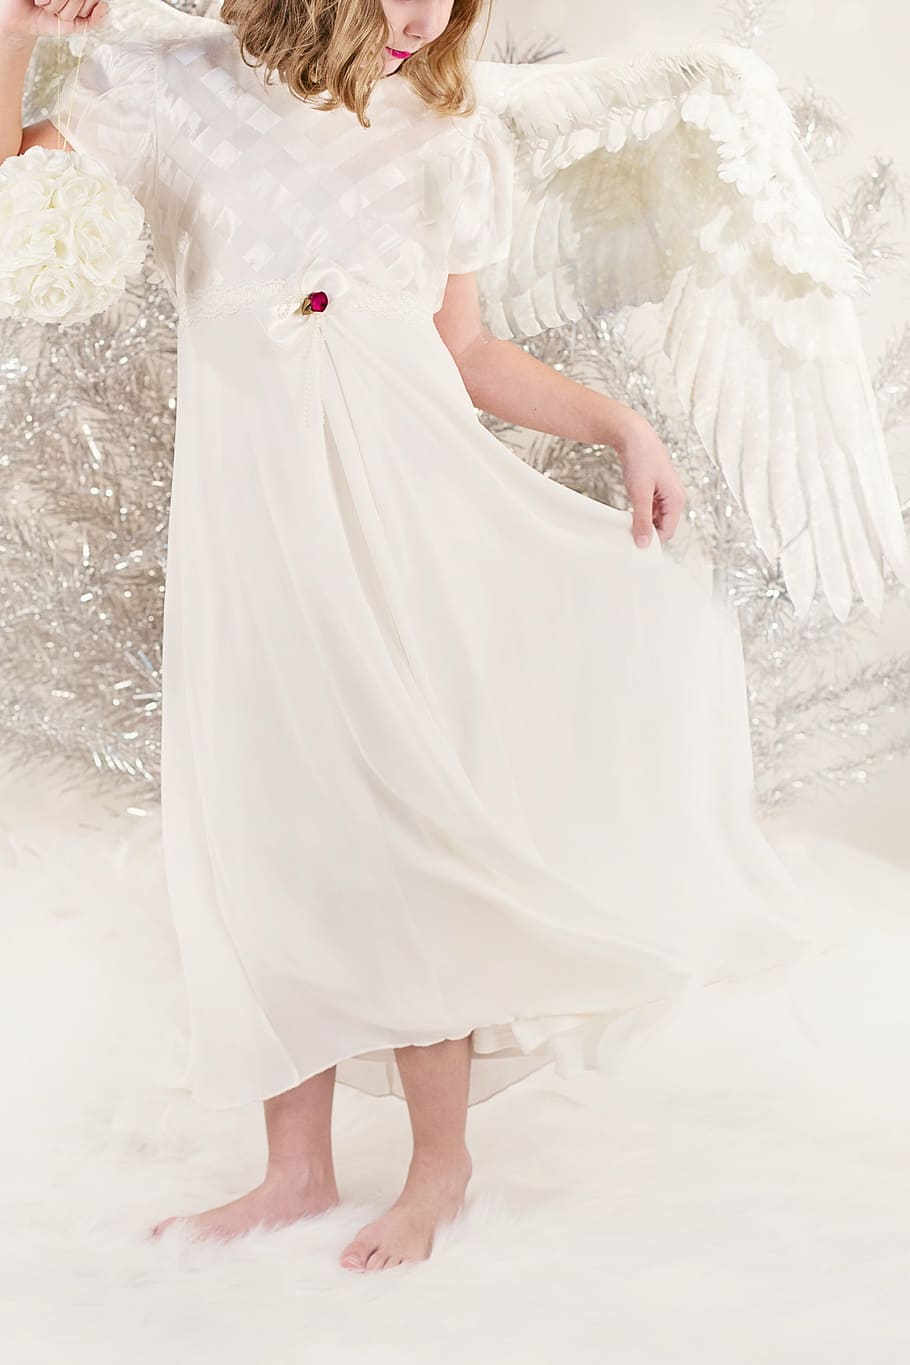 girl, wearing, white, dress, wings, standing, rug, girl angel, christmas, xmas